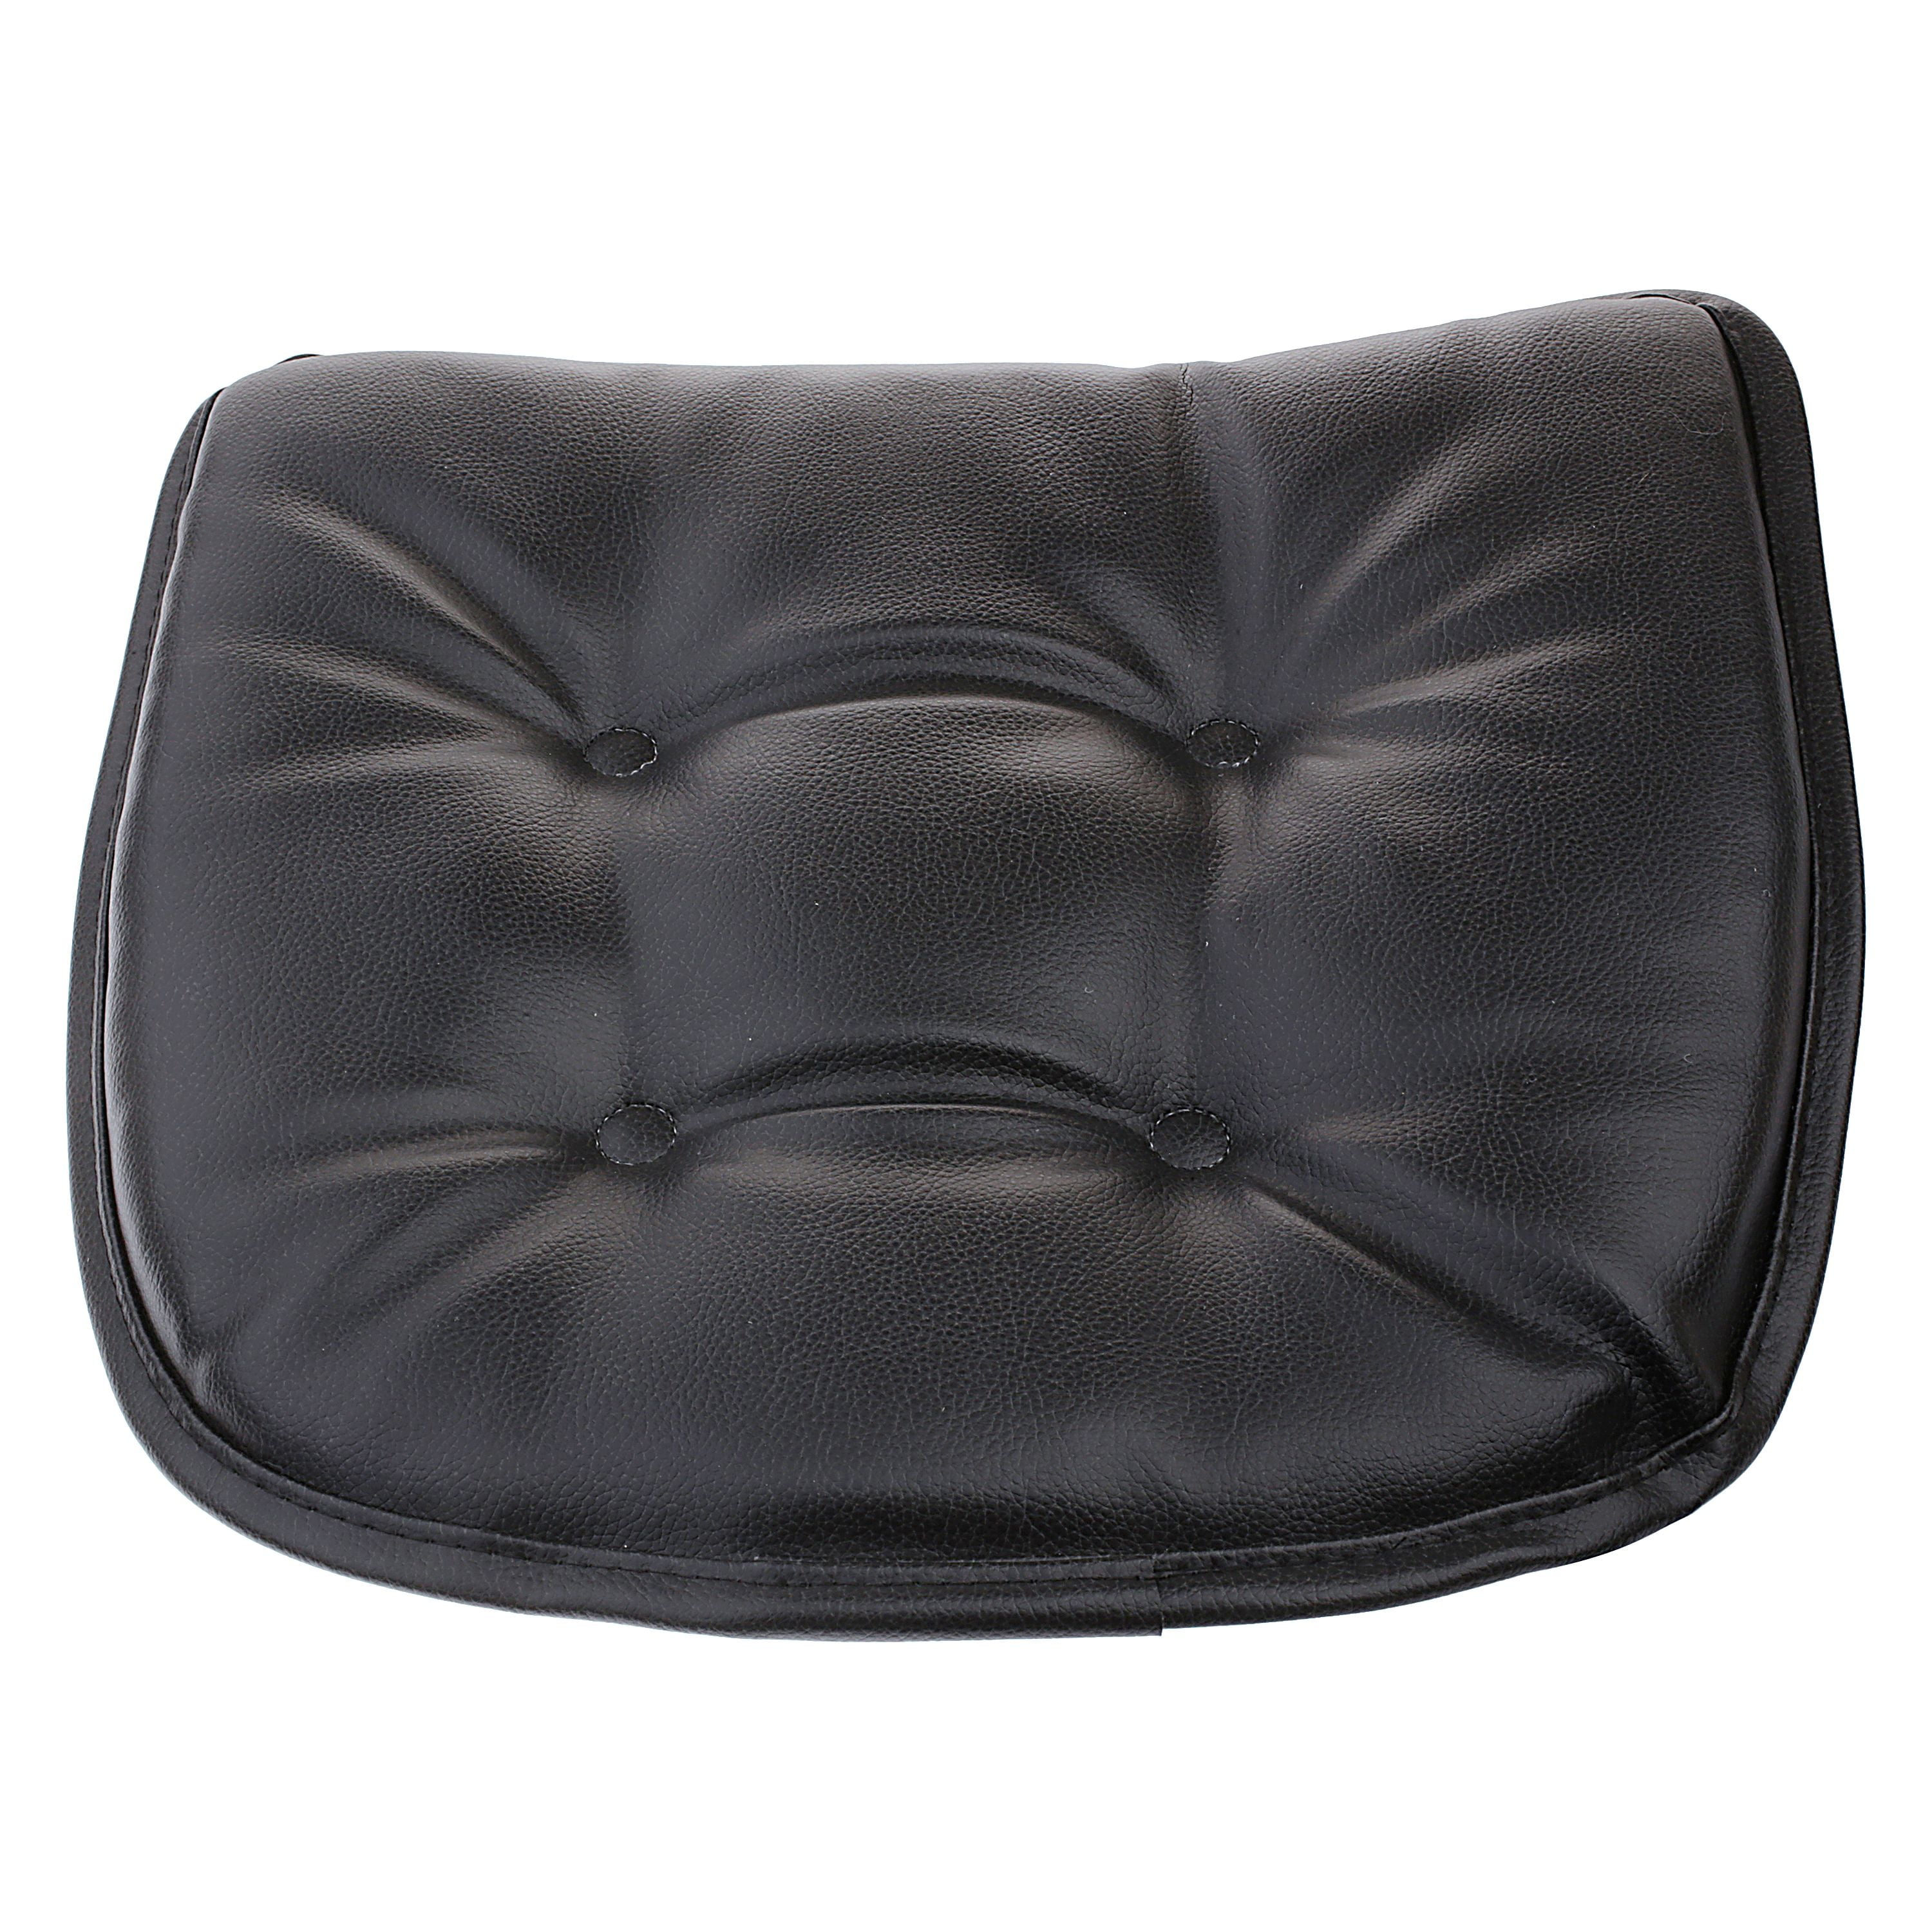 Faux Leather Black Chair Cushion, Leather Chair Cushion Covers